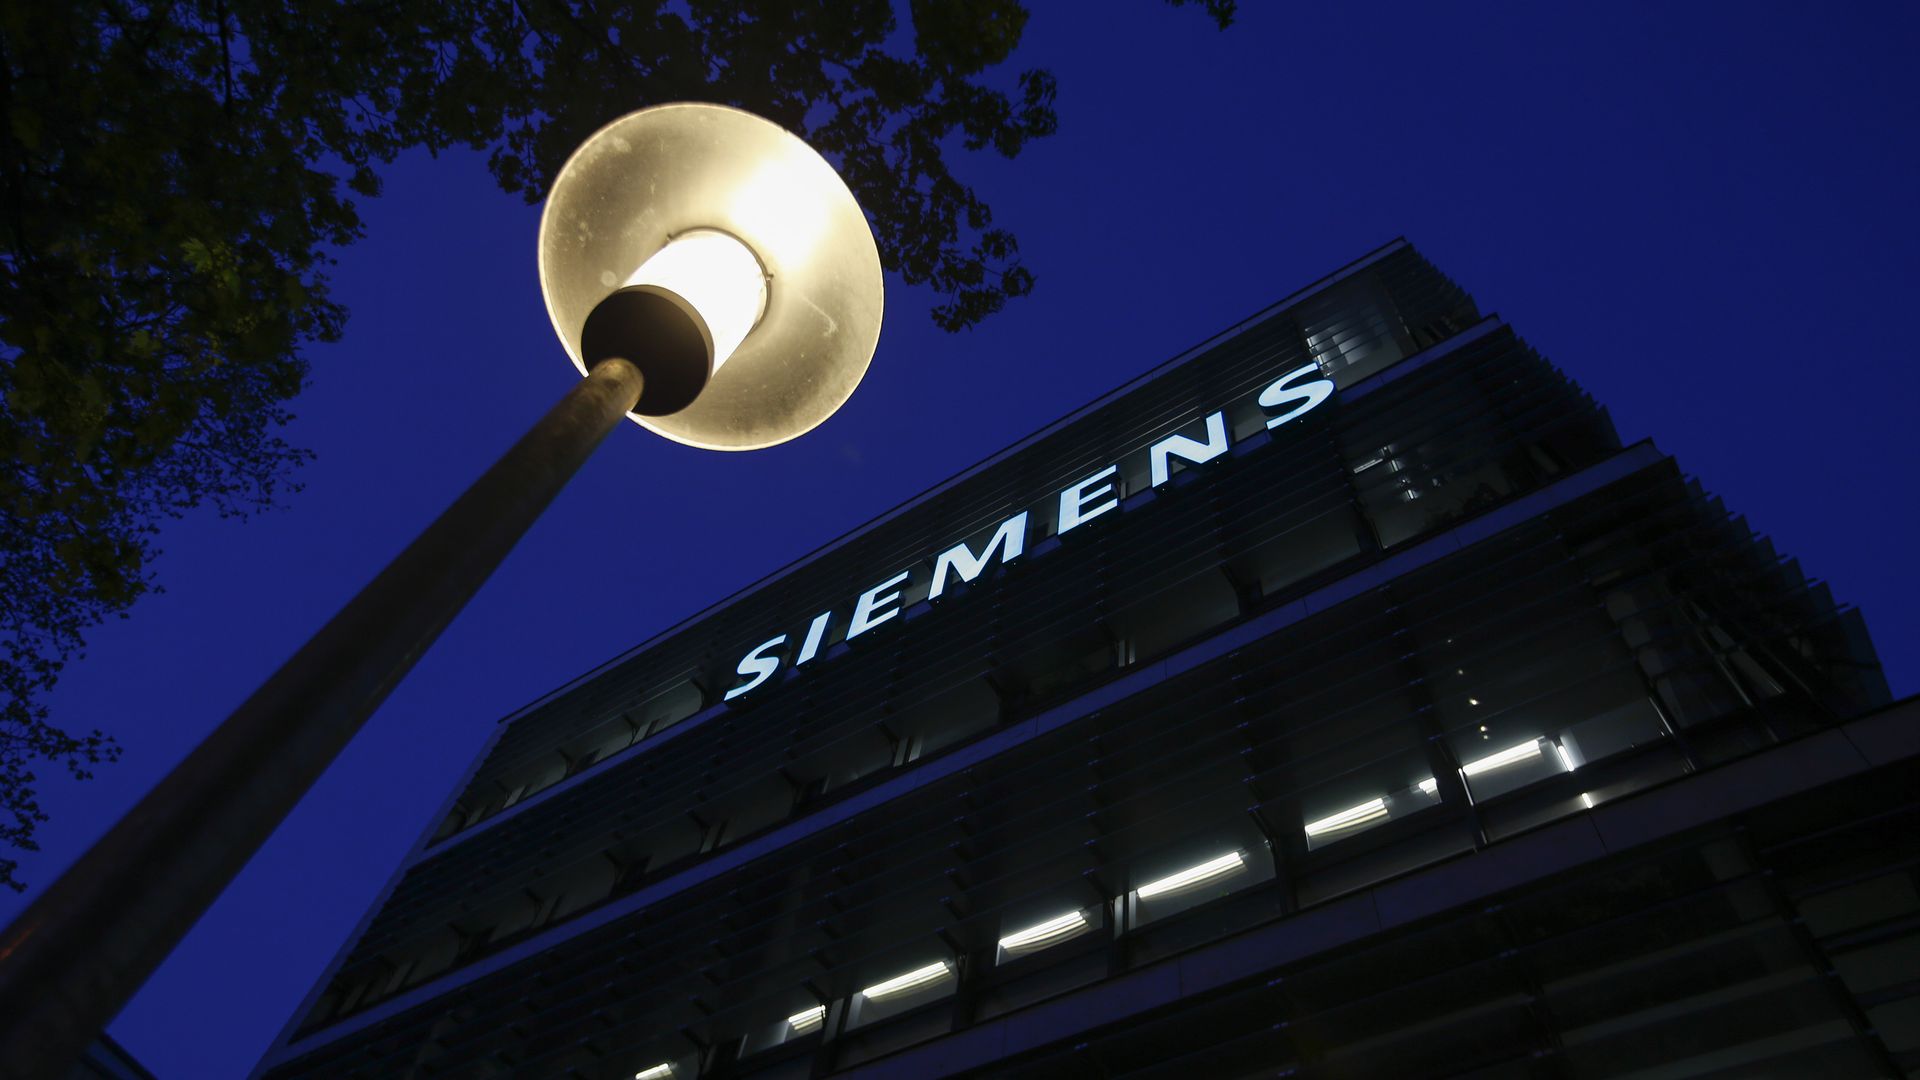 Siemen's HQ building at night. 